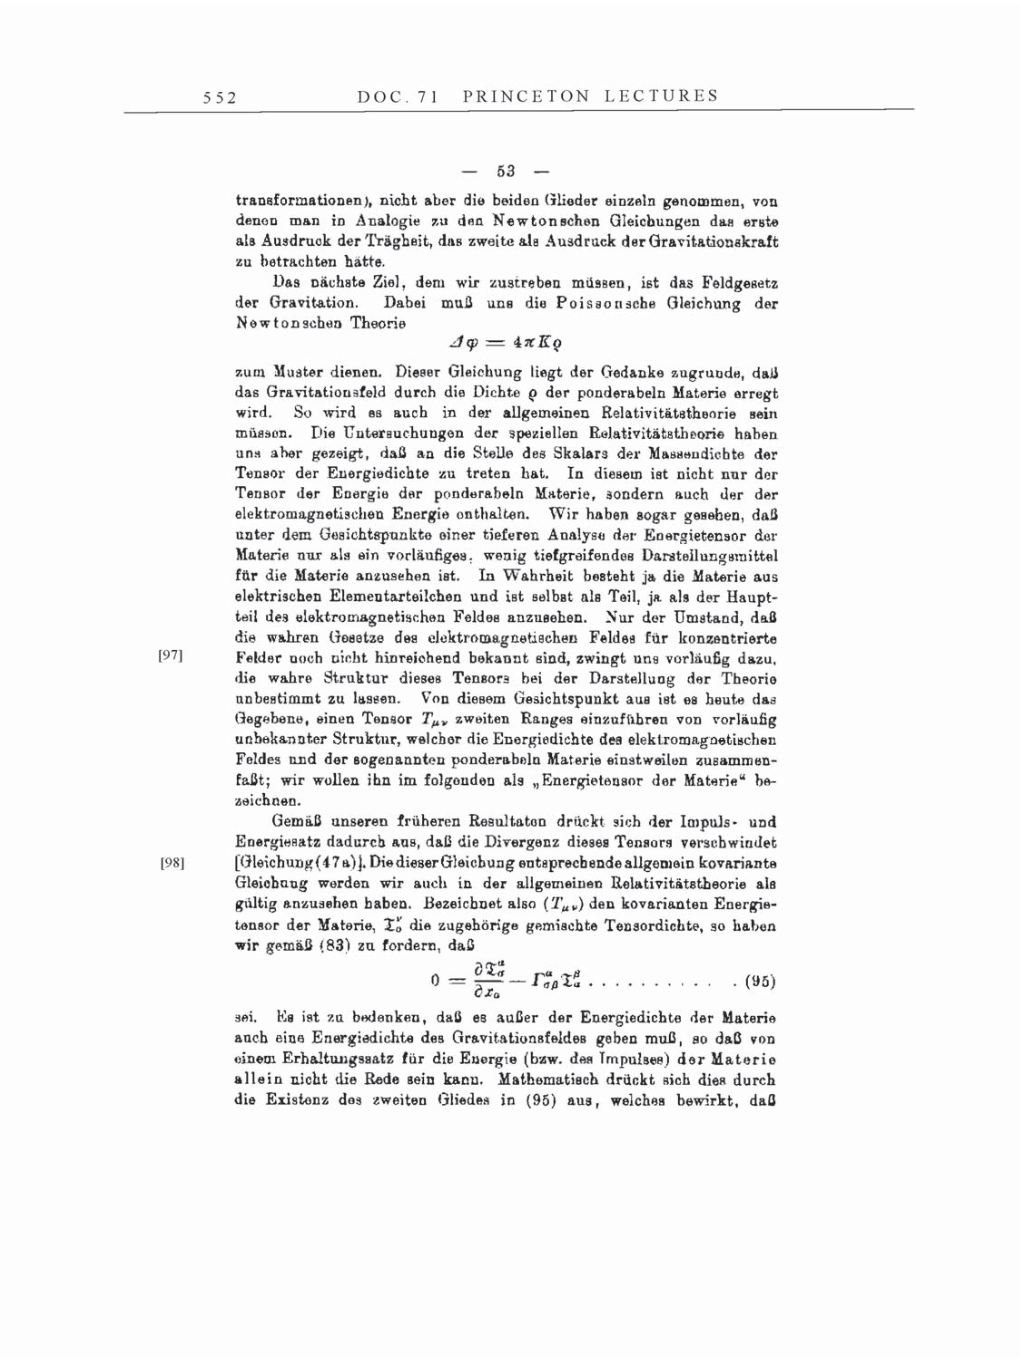 Volume 7: The Berlin Years: Writings, 1918-1921 page 552